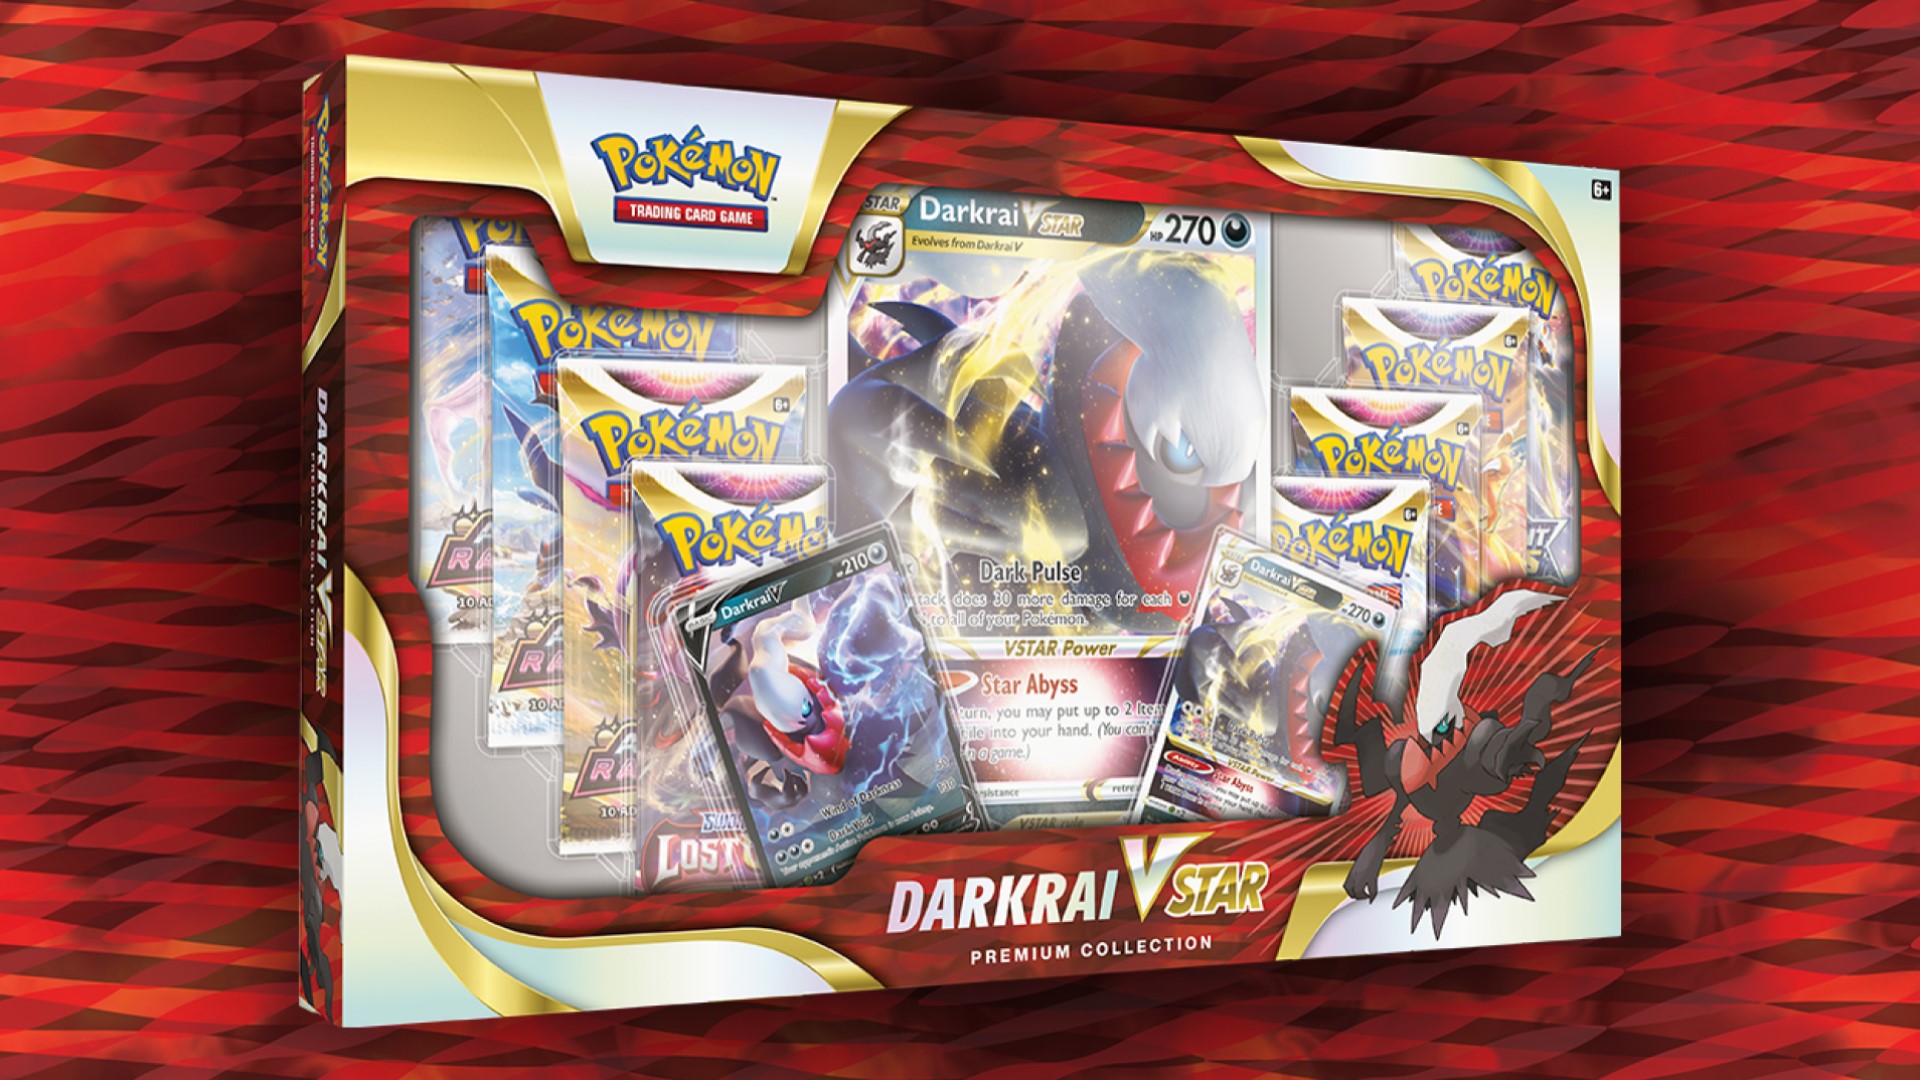 Premium Darkrai and Shaymin Pokémon card boxes are coming